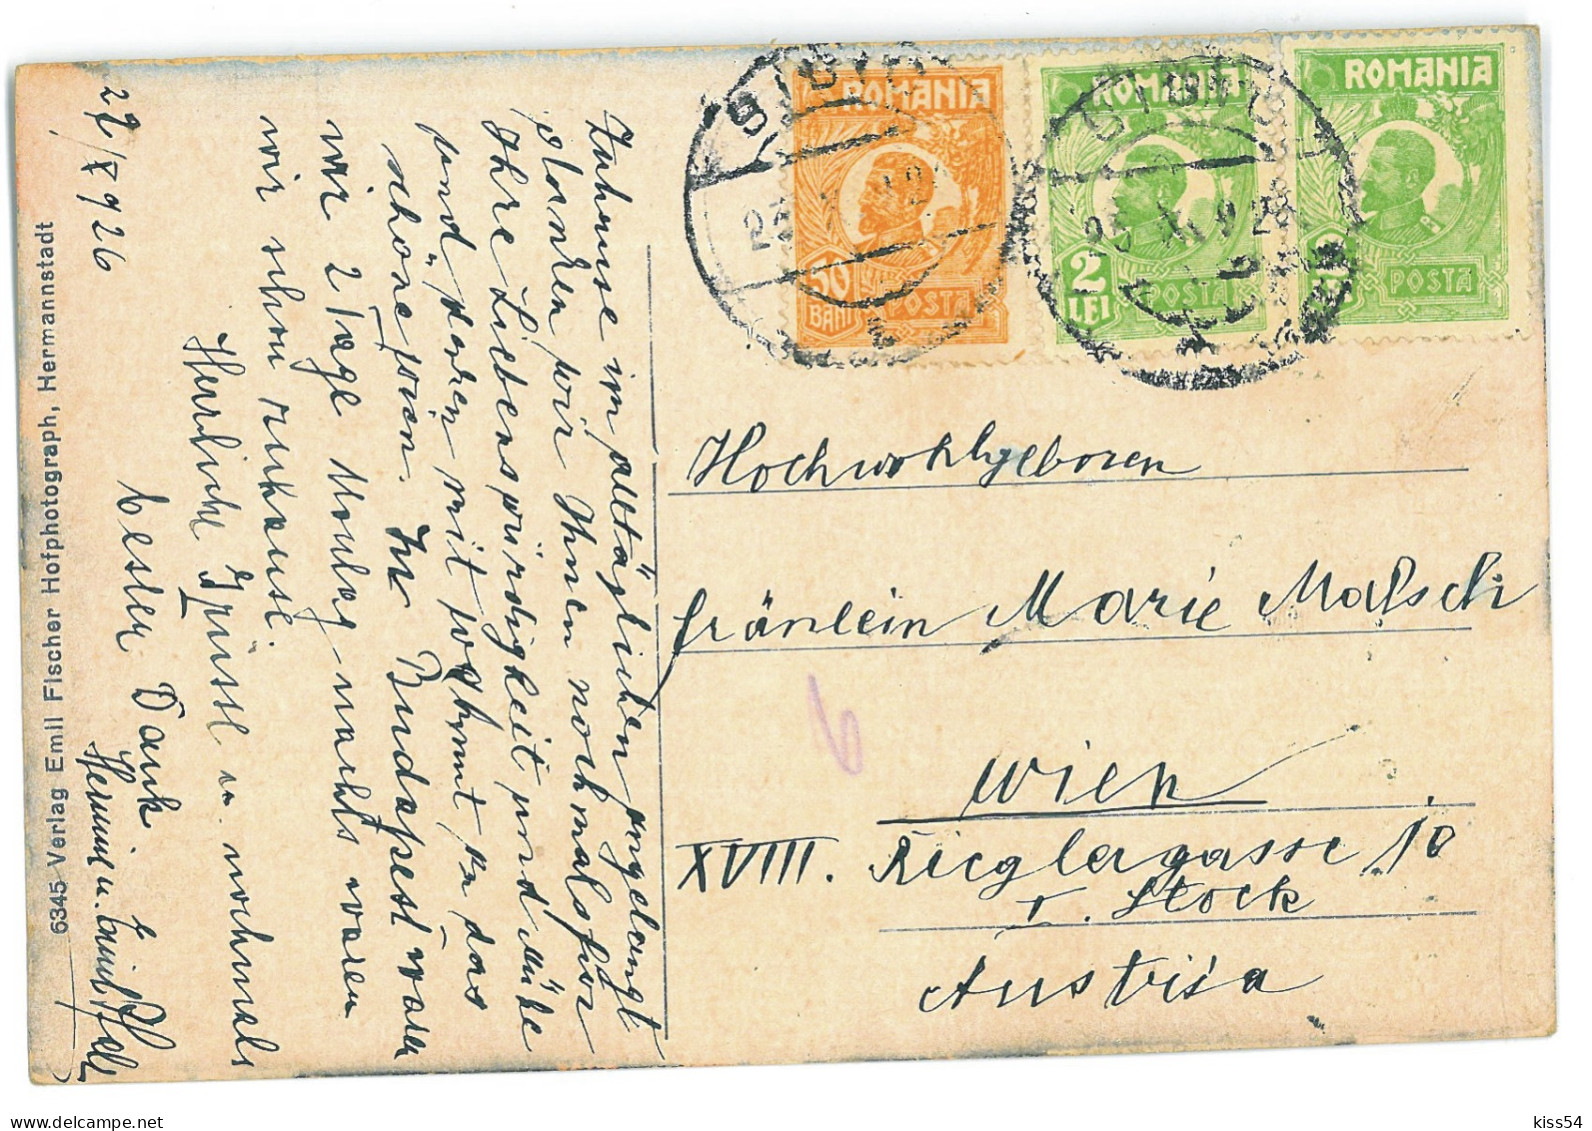 RO 09 - 22407 SIBIU, Tramway, Romania - Old Postcard - Used - 1926 - Rumänien